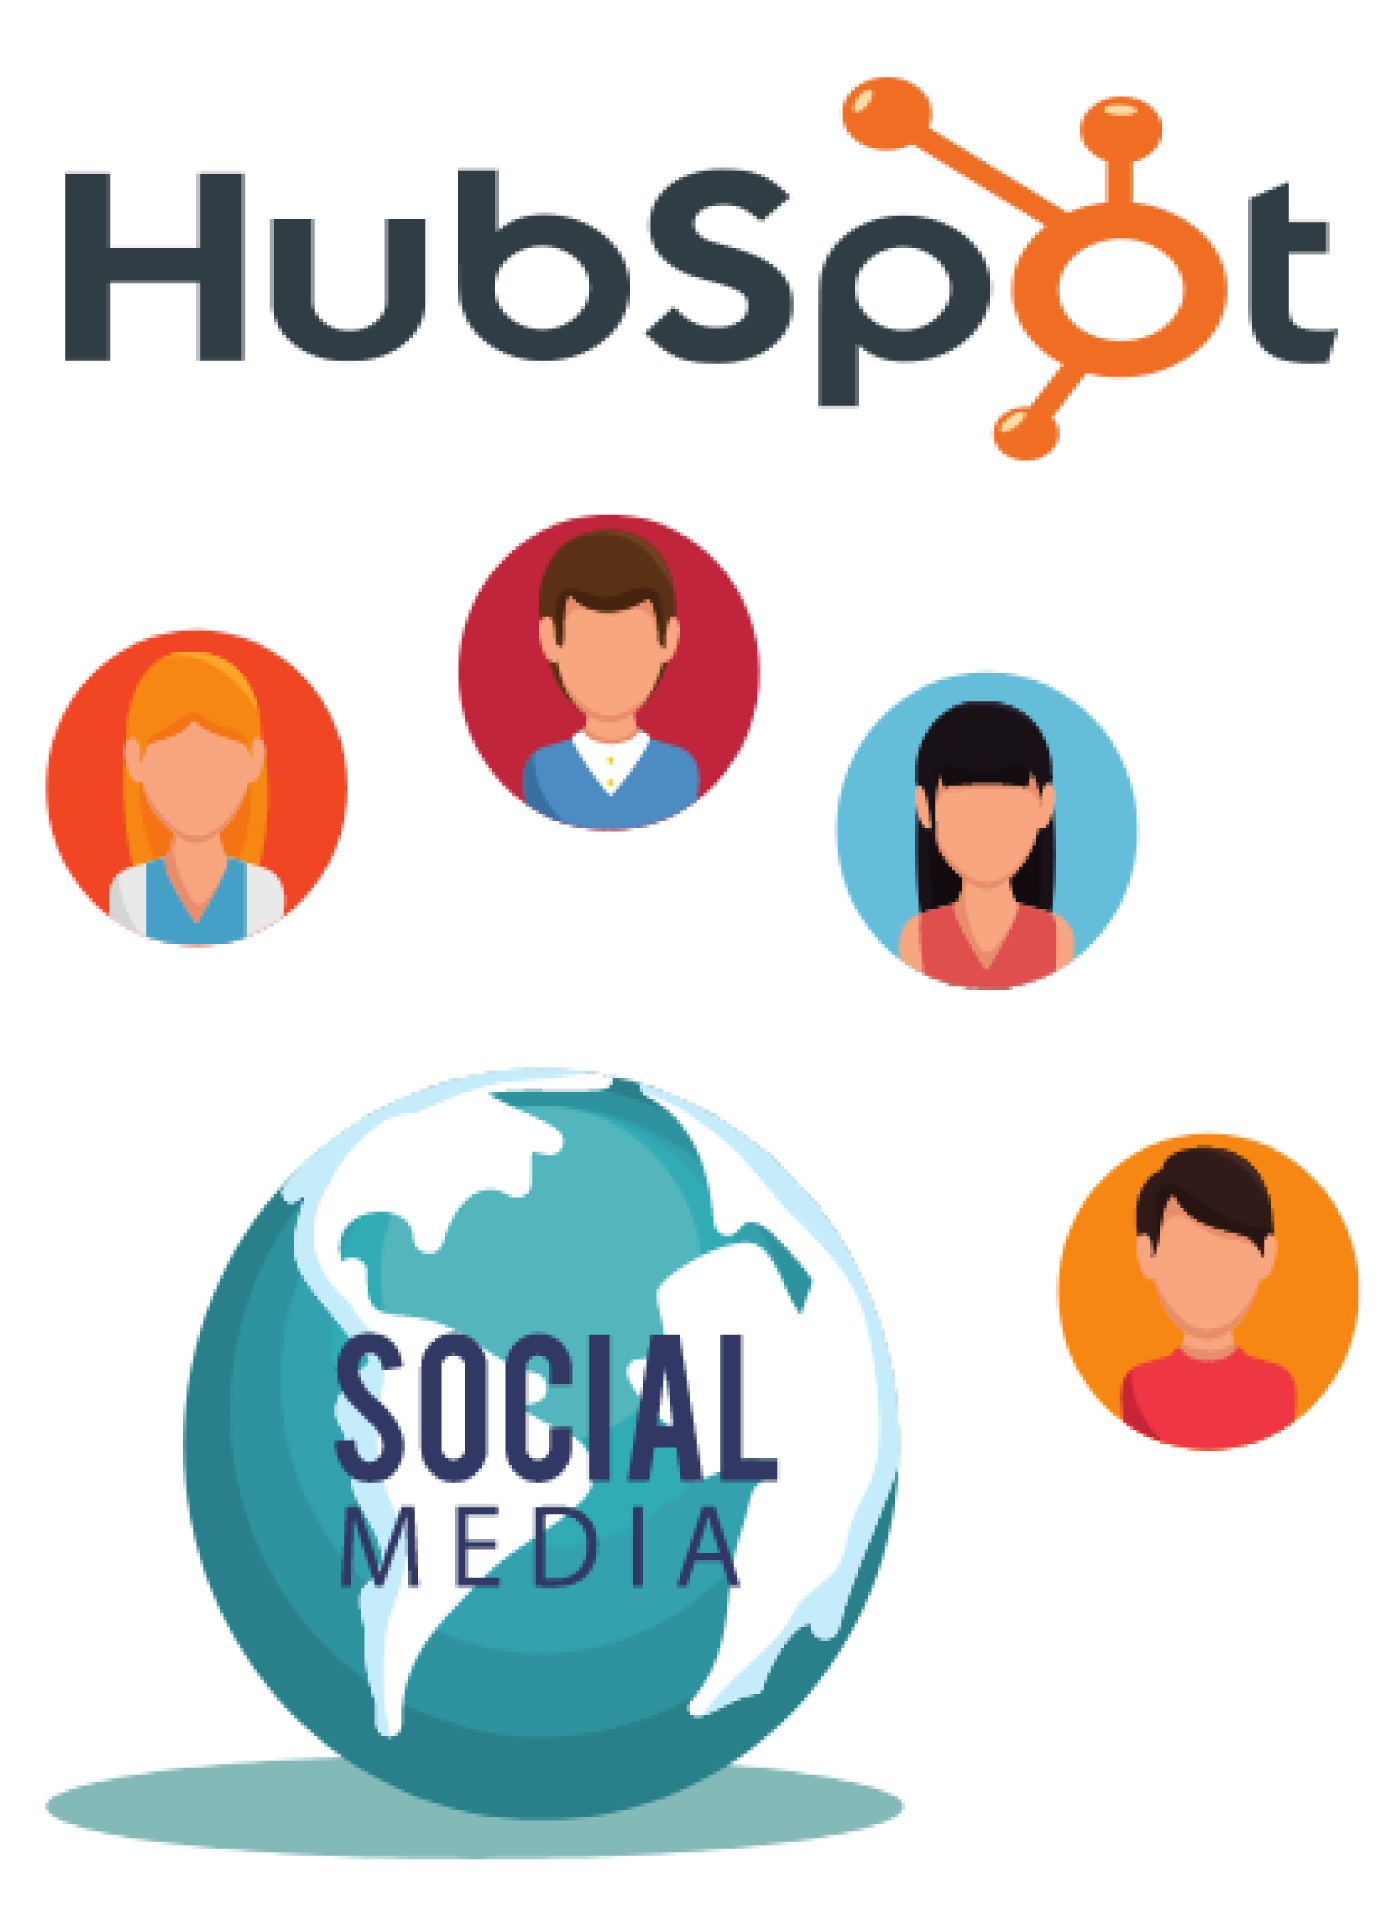 sprout social vs hubspot, hootsuite vs sprout social, sprout social vs hootsuite vs hubspot, sprout social vs buffer